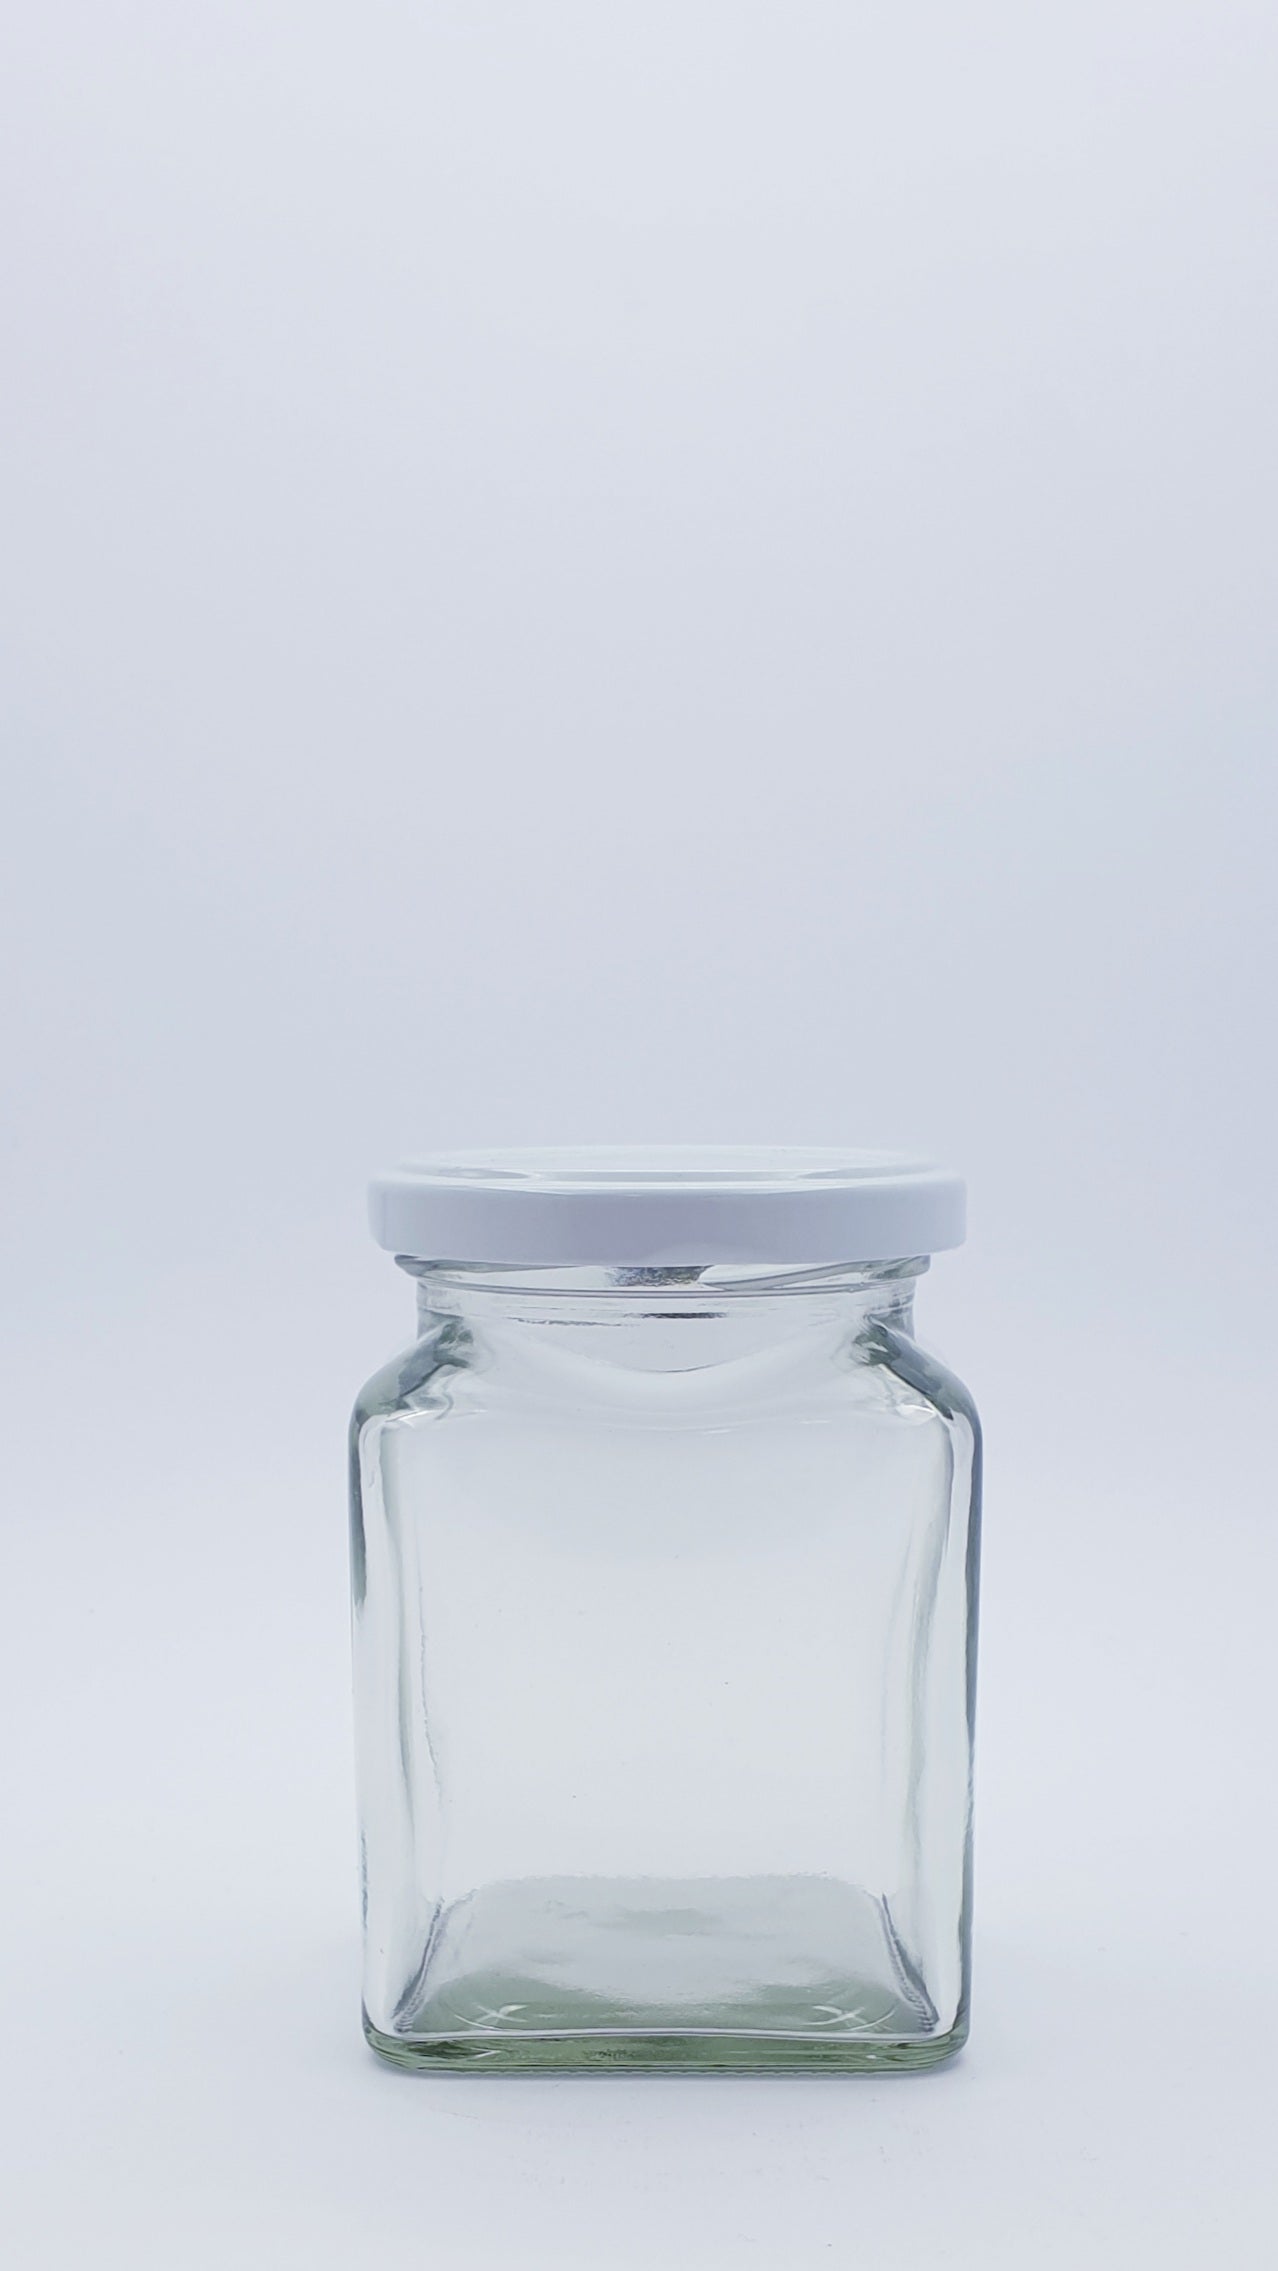 270ml Square Glass Jar with 63mm Twist Cap - 48 Jars and Caps Per Carton - Unit Cost $1.59c Each (Jar/Capcombo)